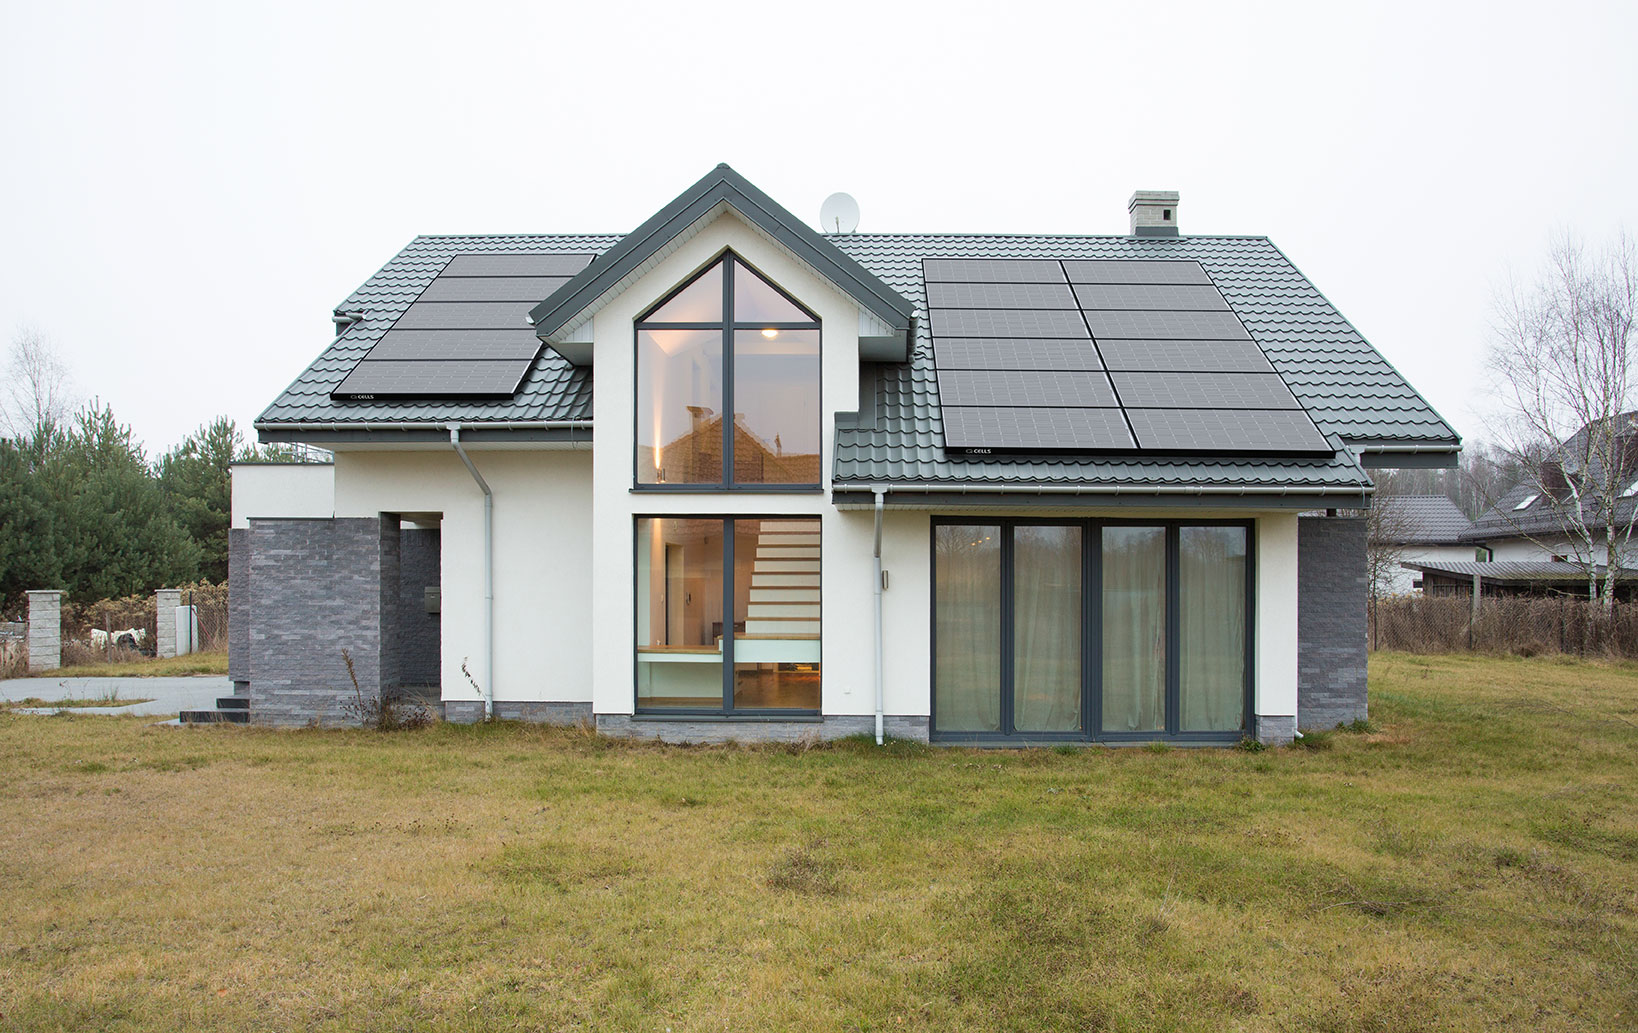 Where to buy Solar Panels? Solar Optimum’s $750 Rebate has Homeowners Excited